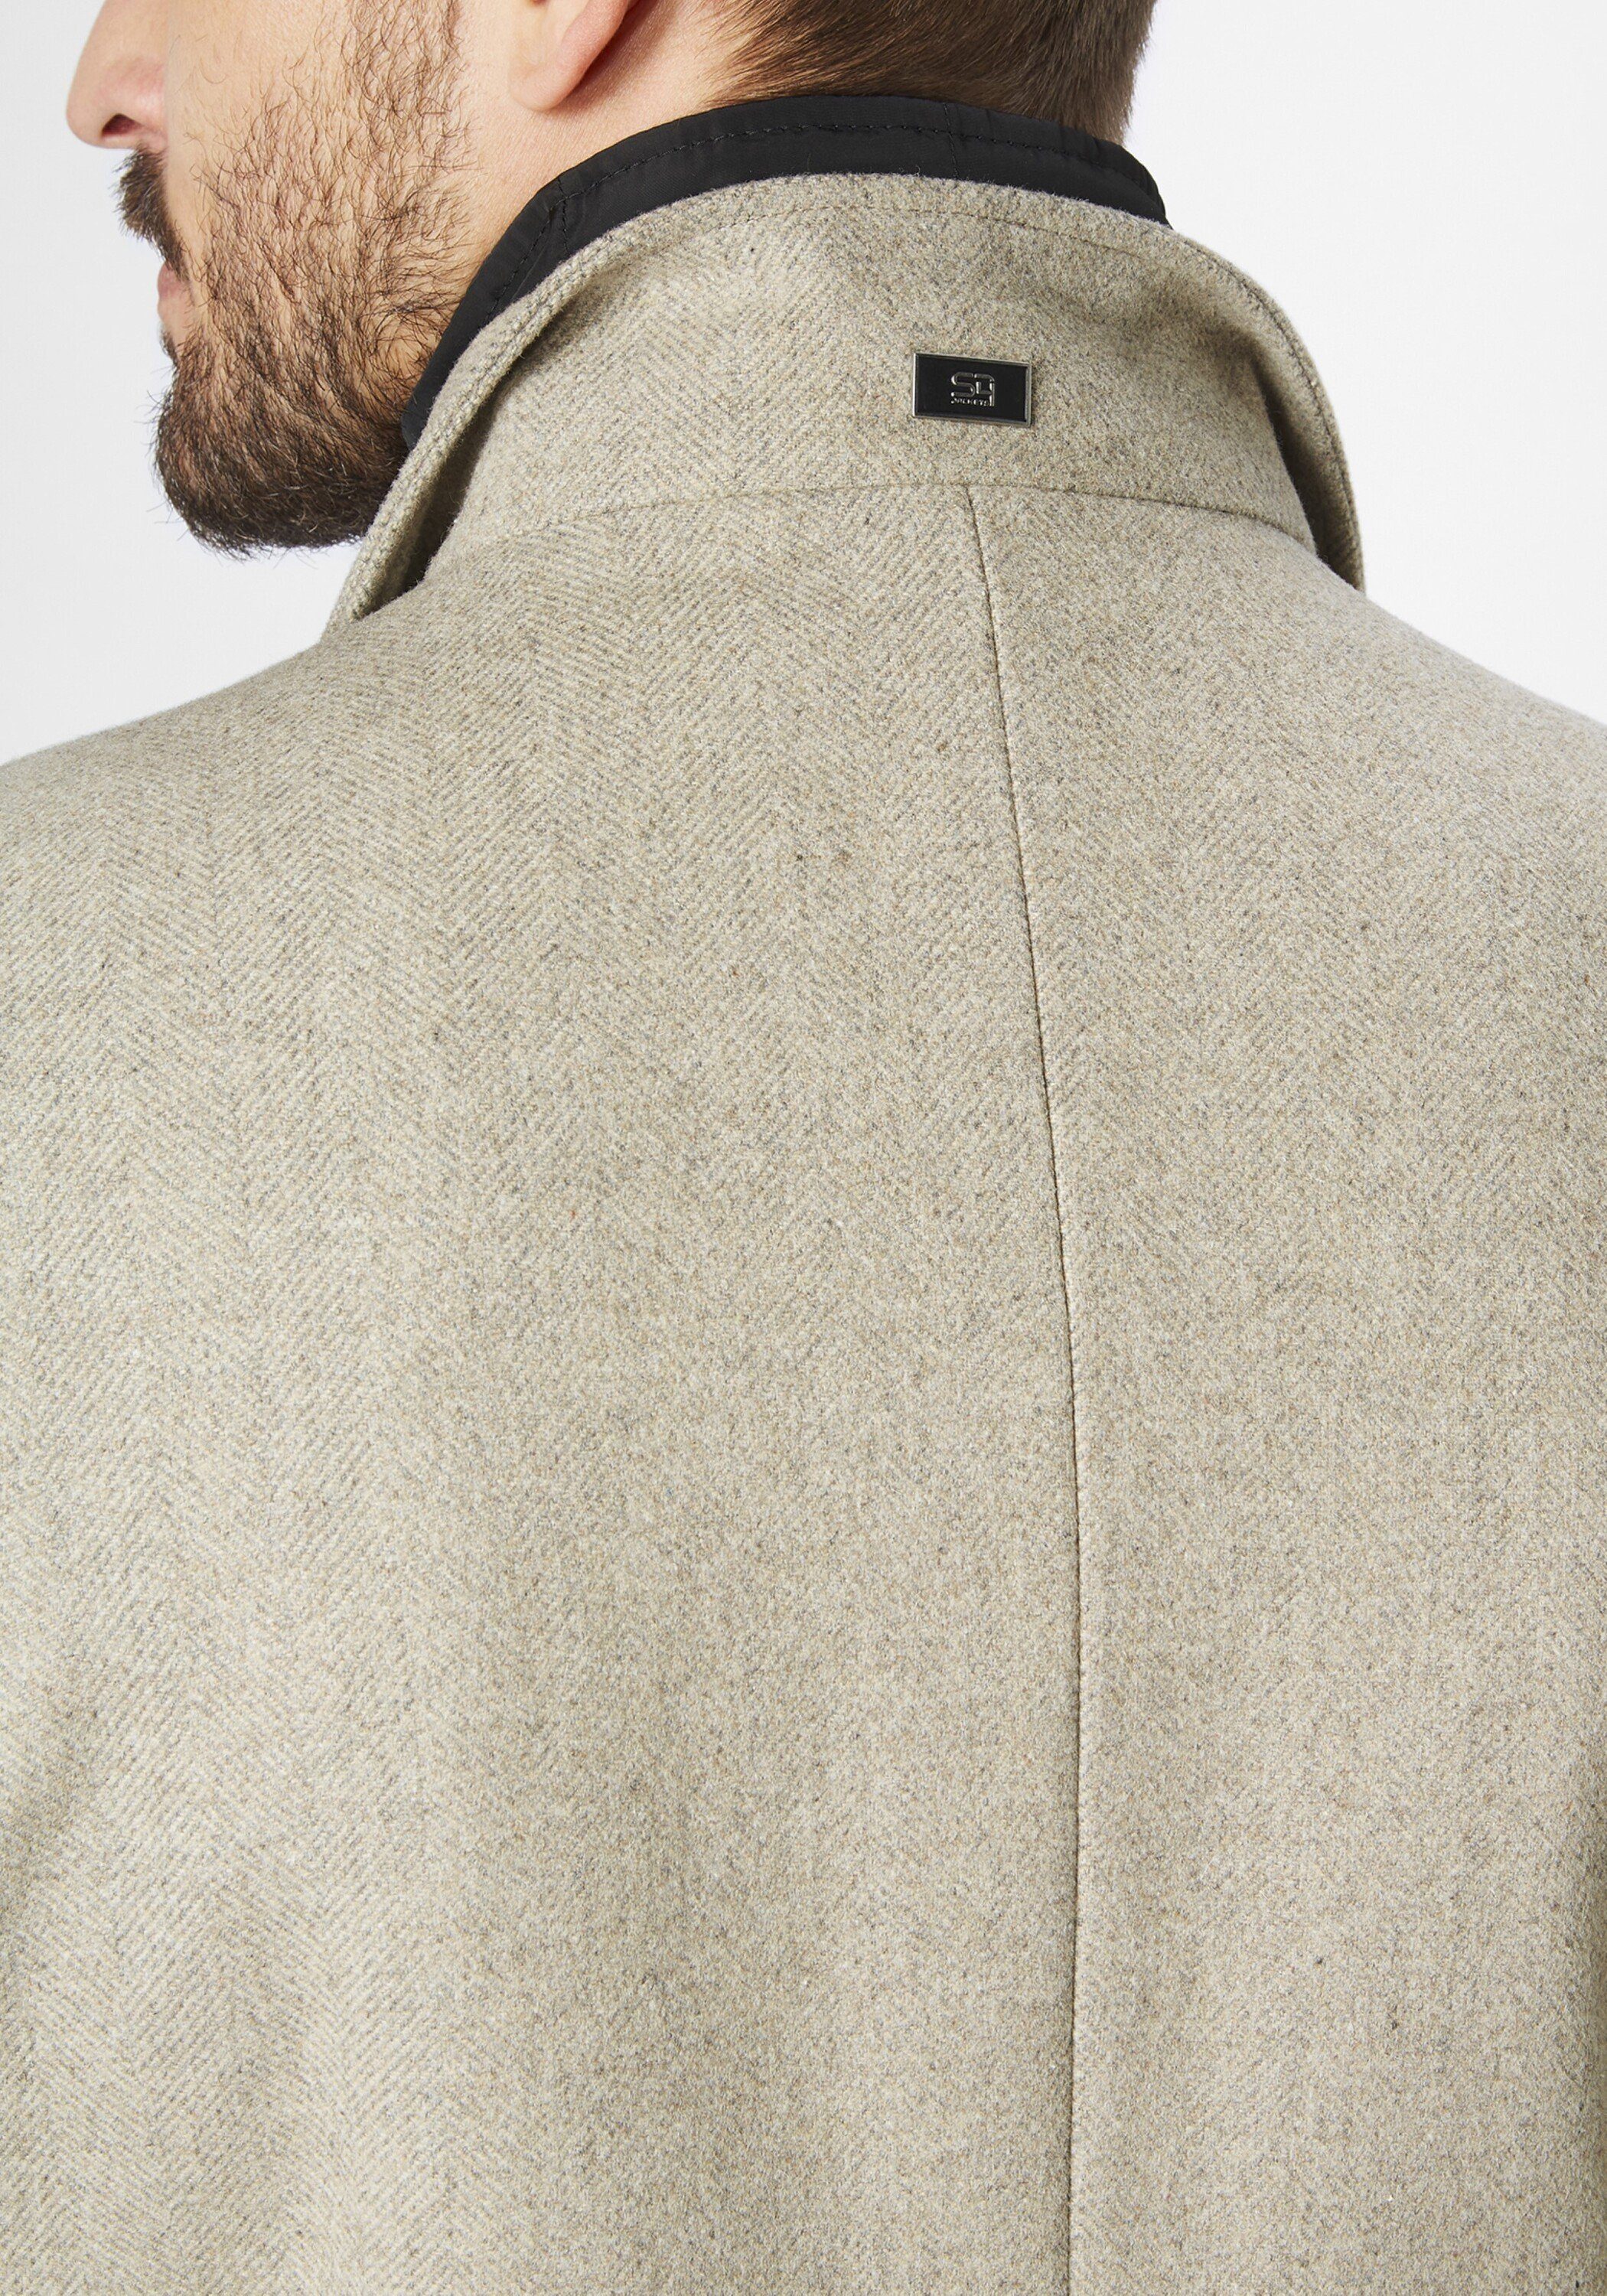 Newton Wollmantel grey/anthra Mantel L Jackets S4 moderner